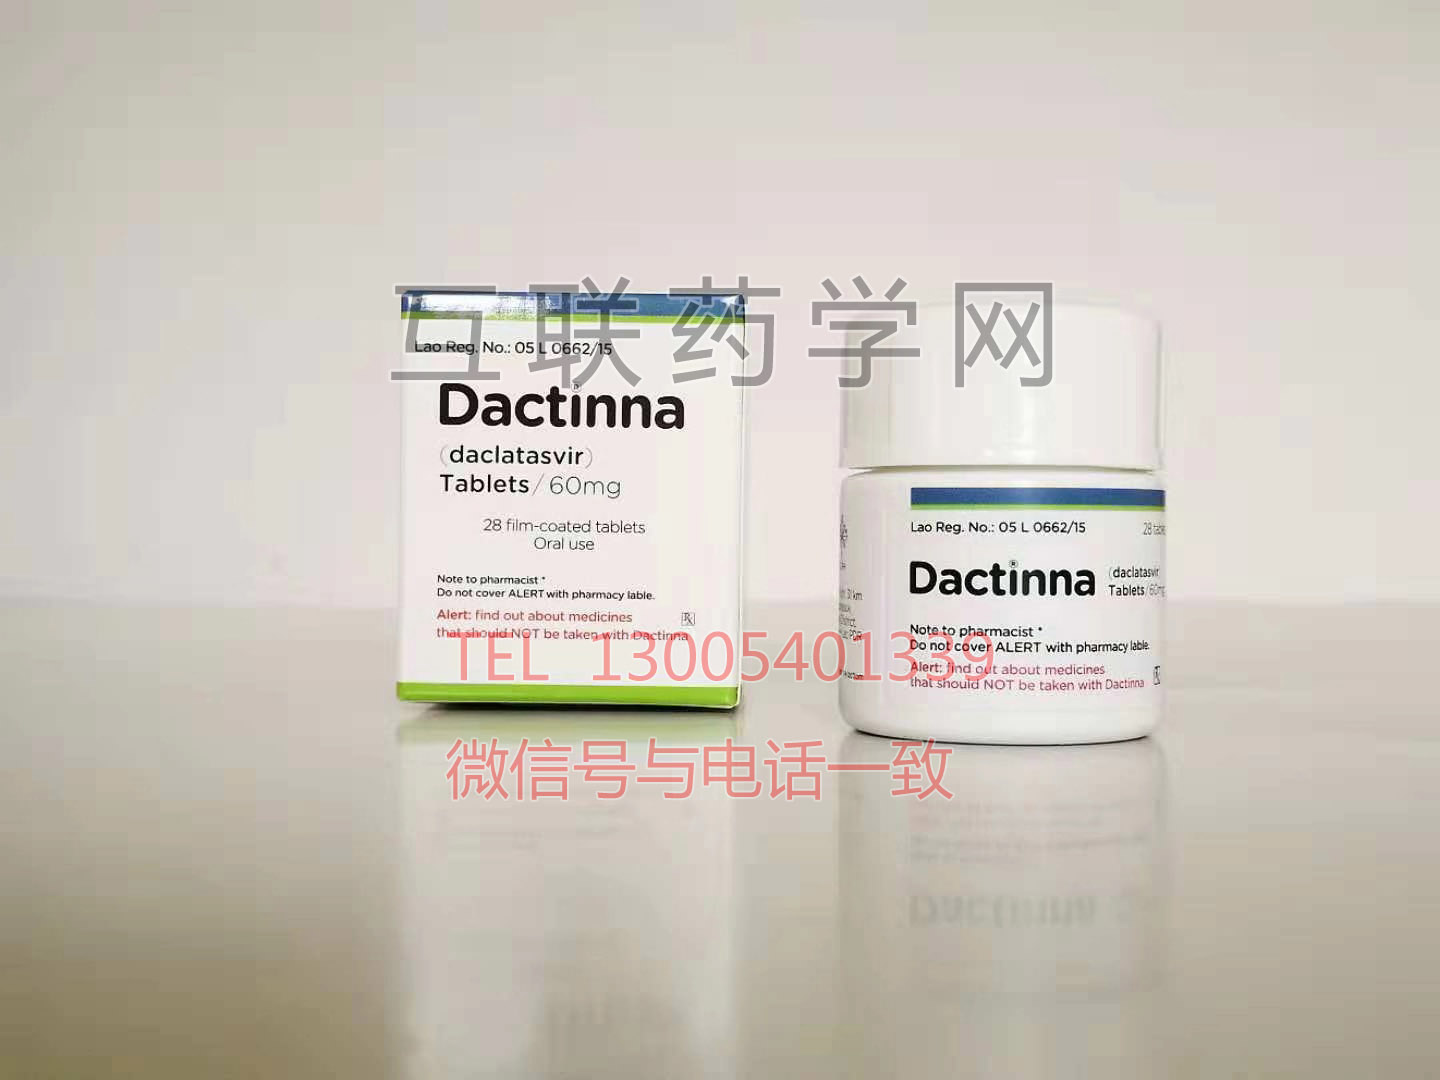 dactinna(daclatasvir)